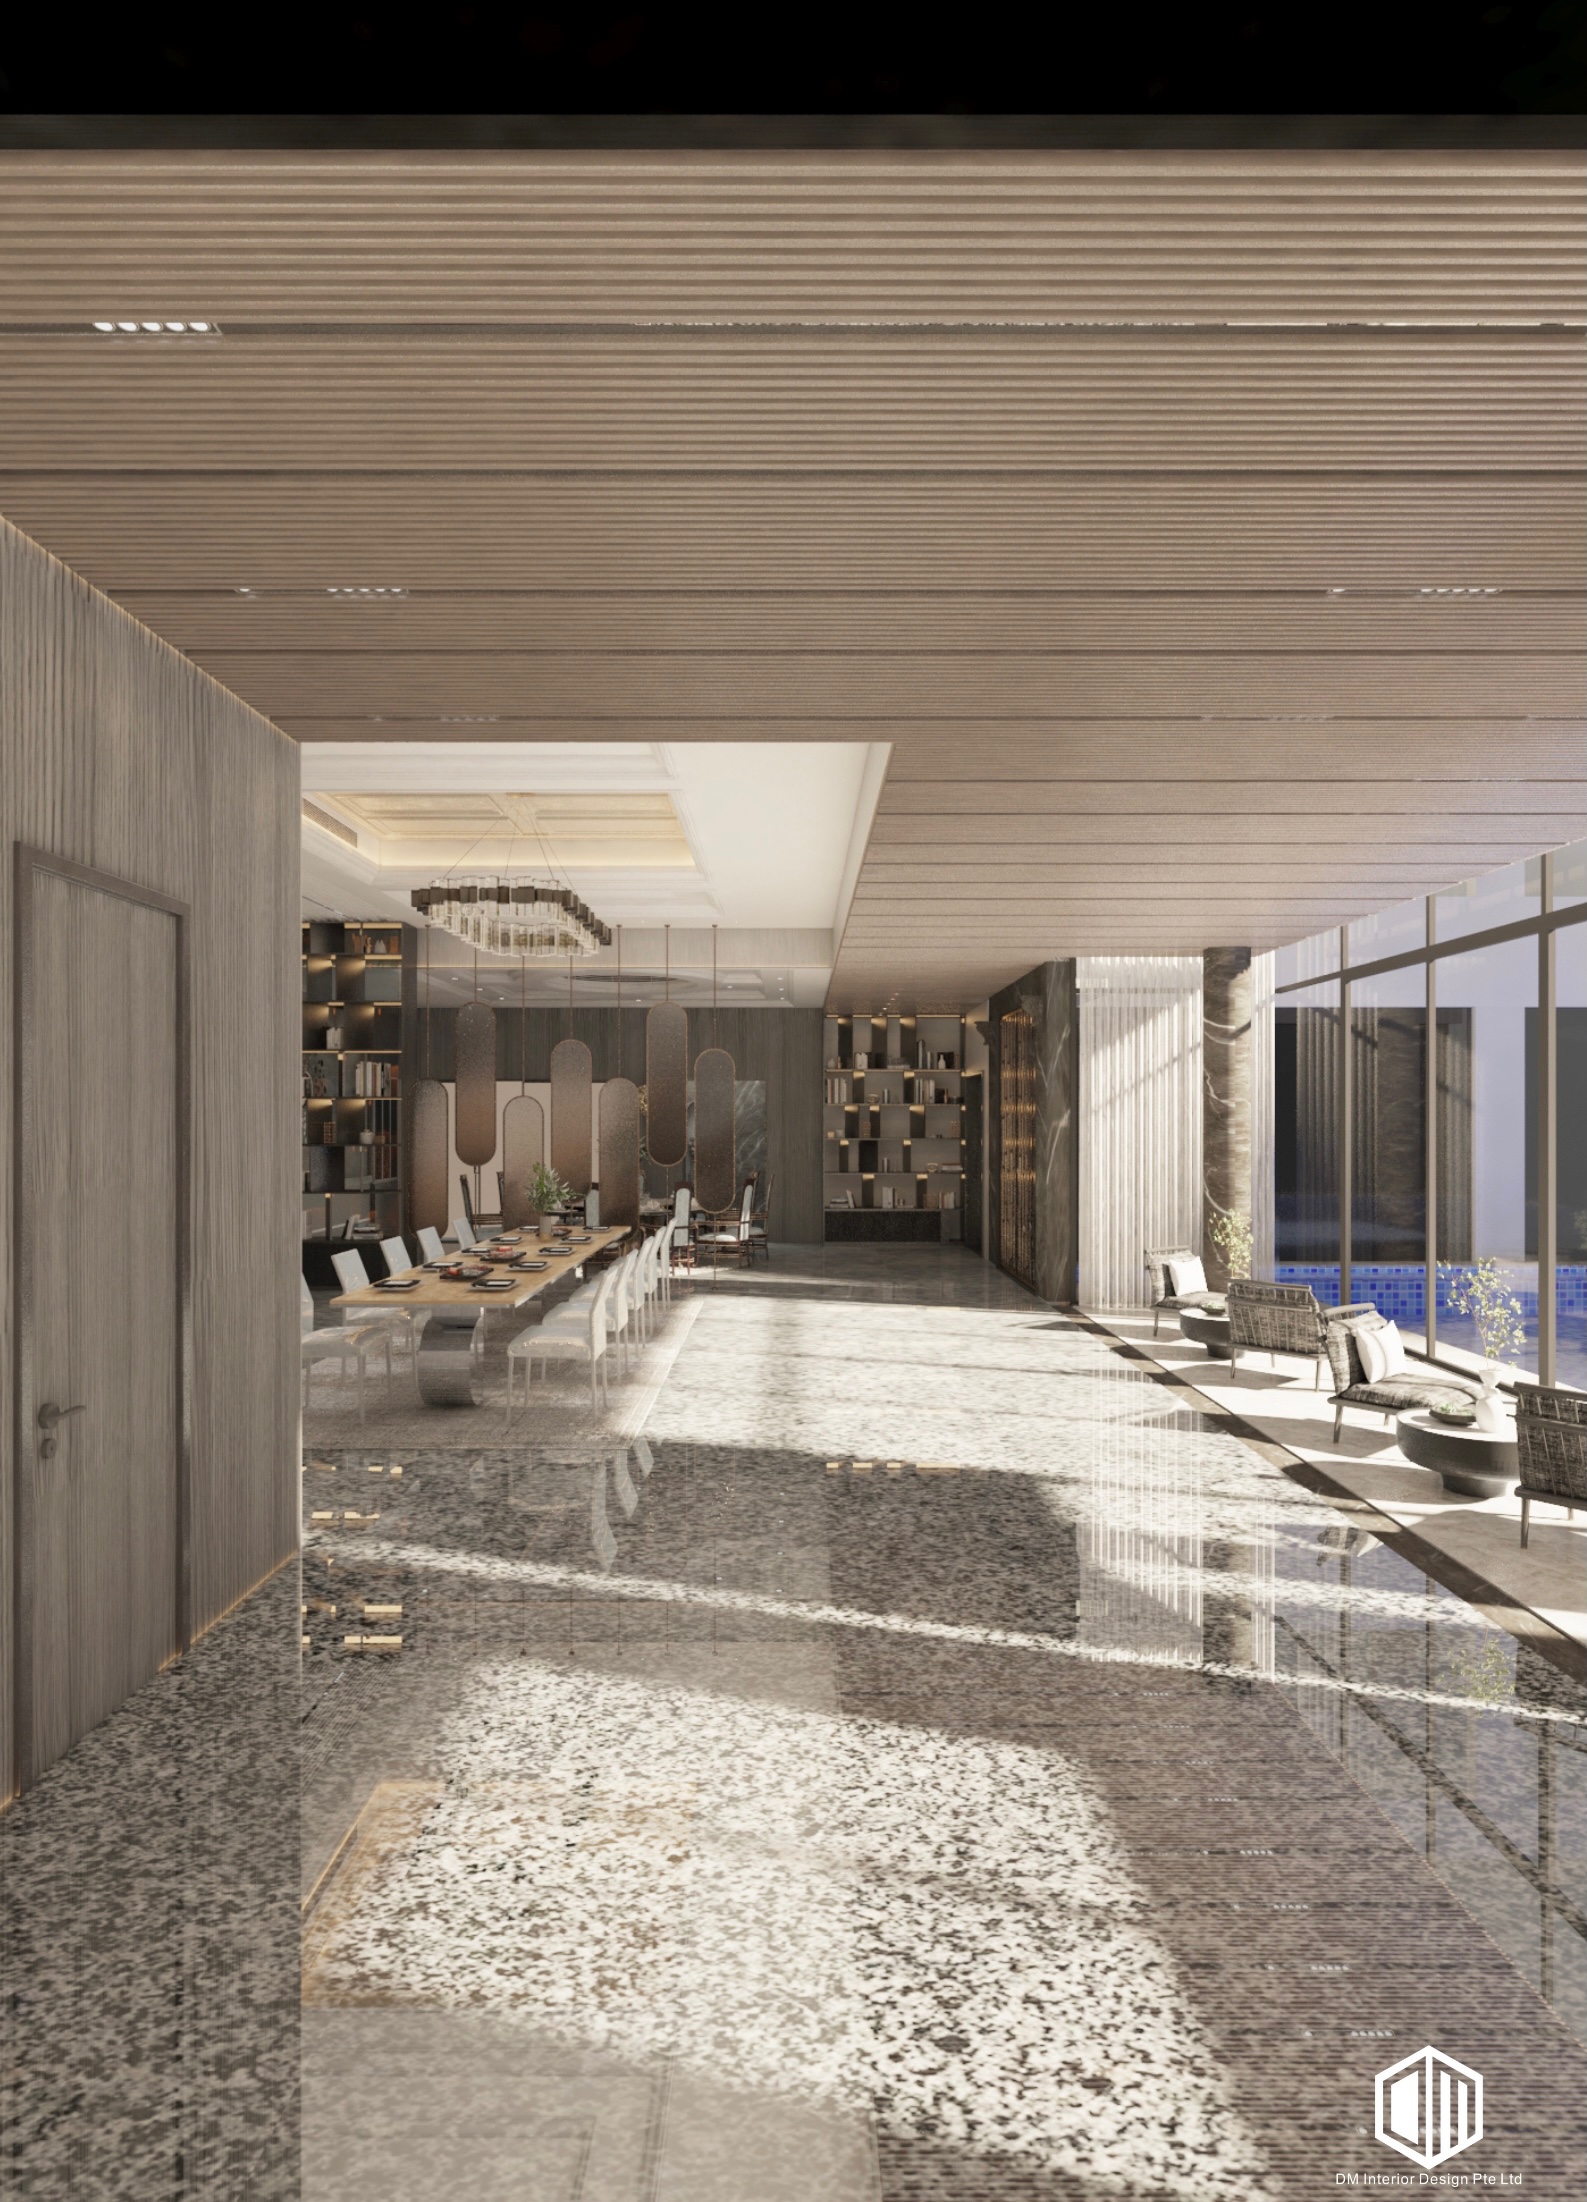 DM Interior Design - The Good Class Bungalow Elite Residential Project - Singapore